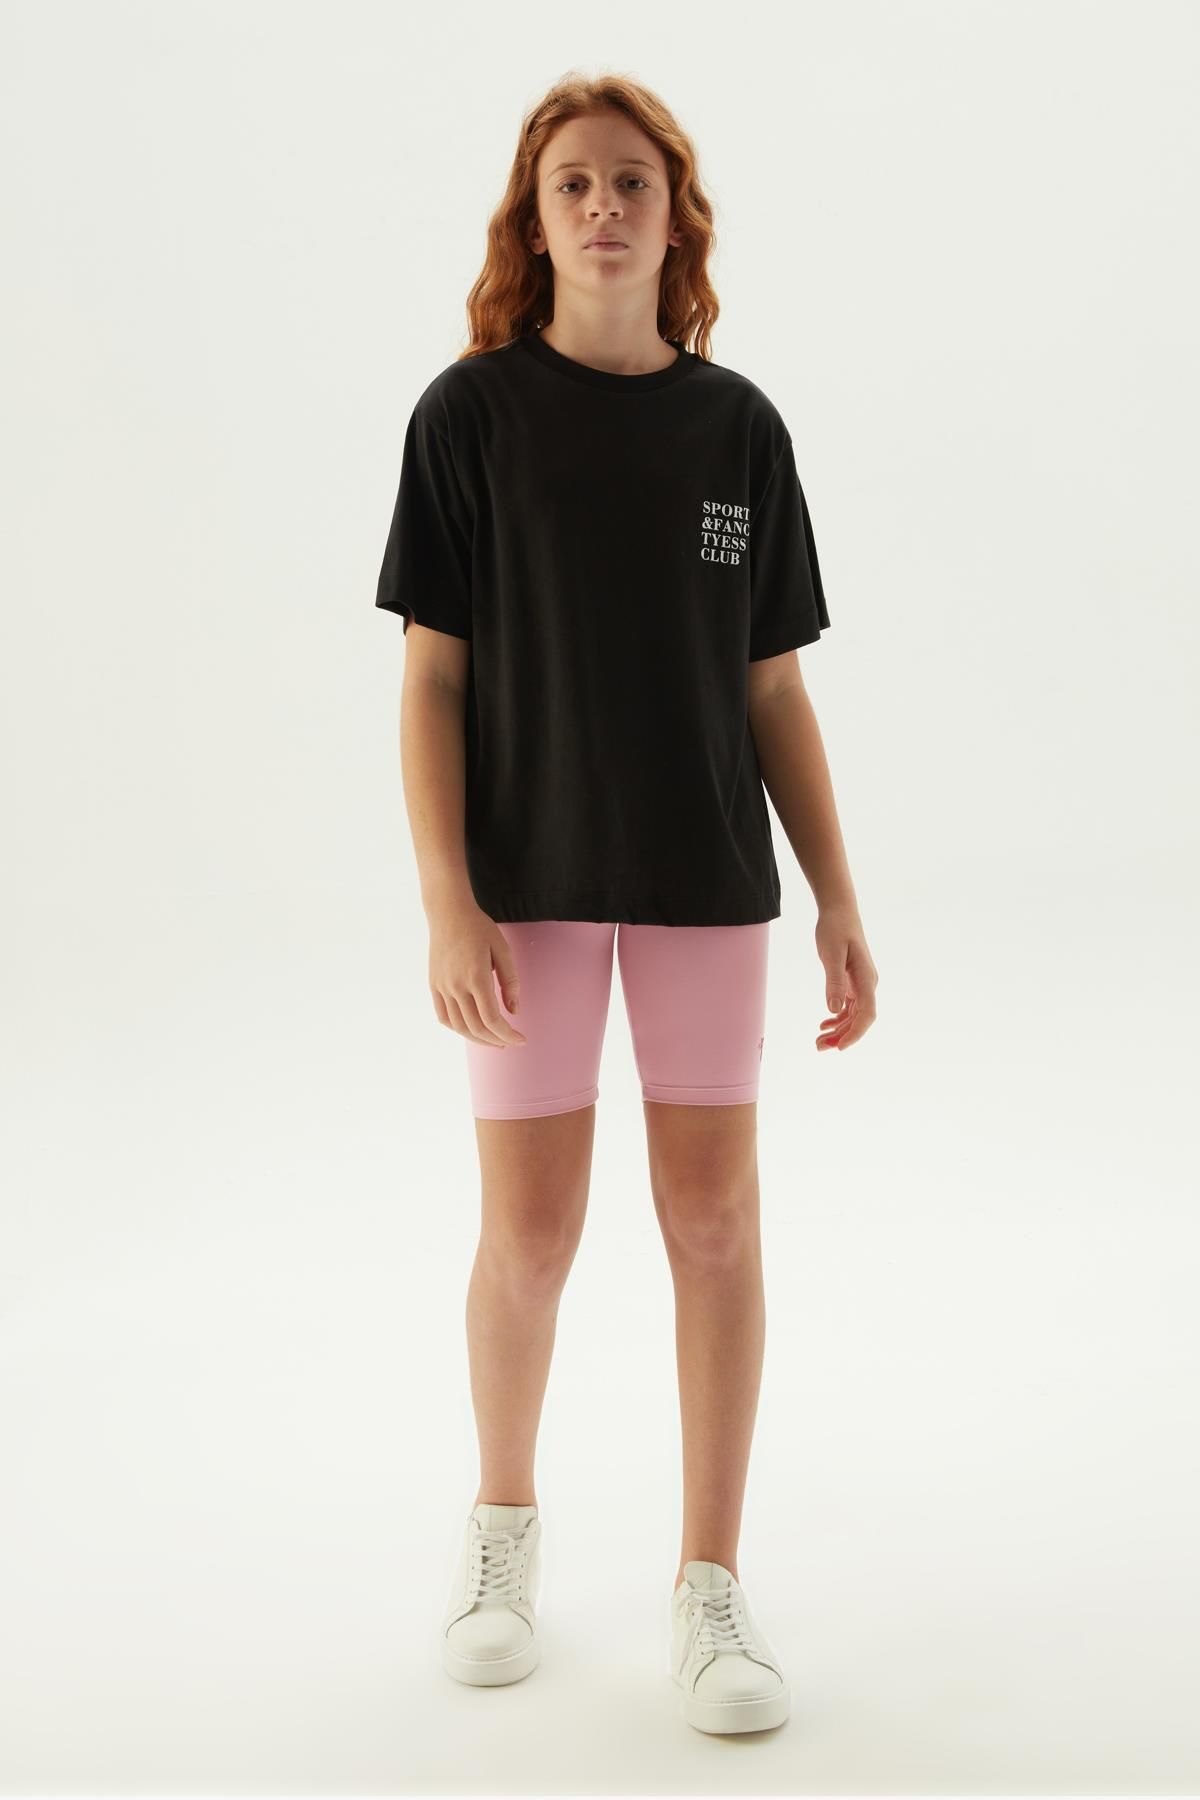 Tyess BG Store Kız Çocuk Siyah T-Shirt